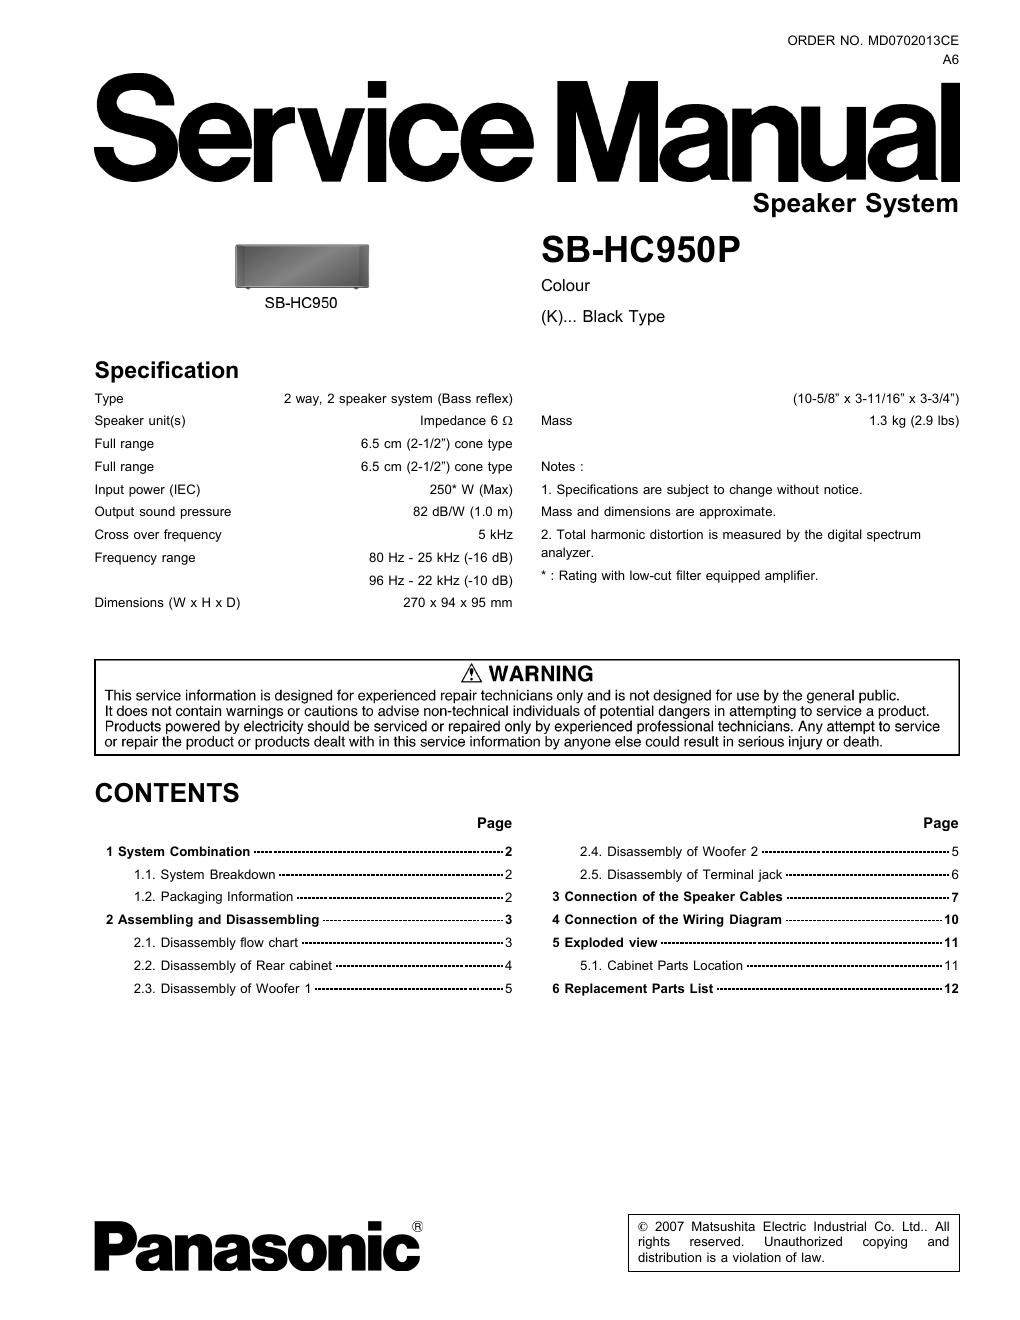 panasonic sb hc 950 p service manual